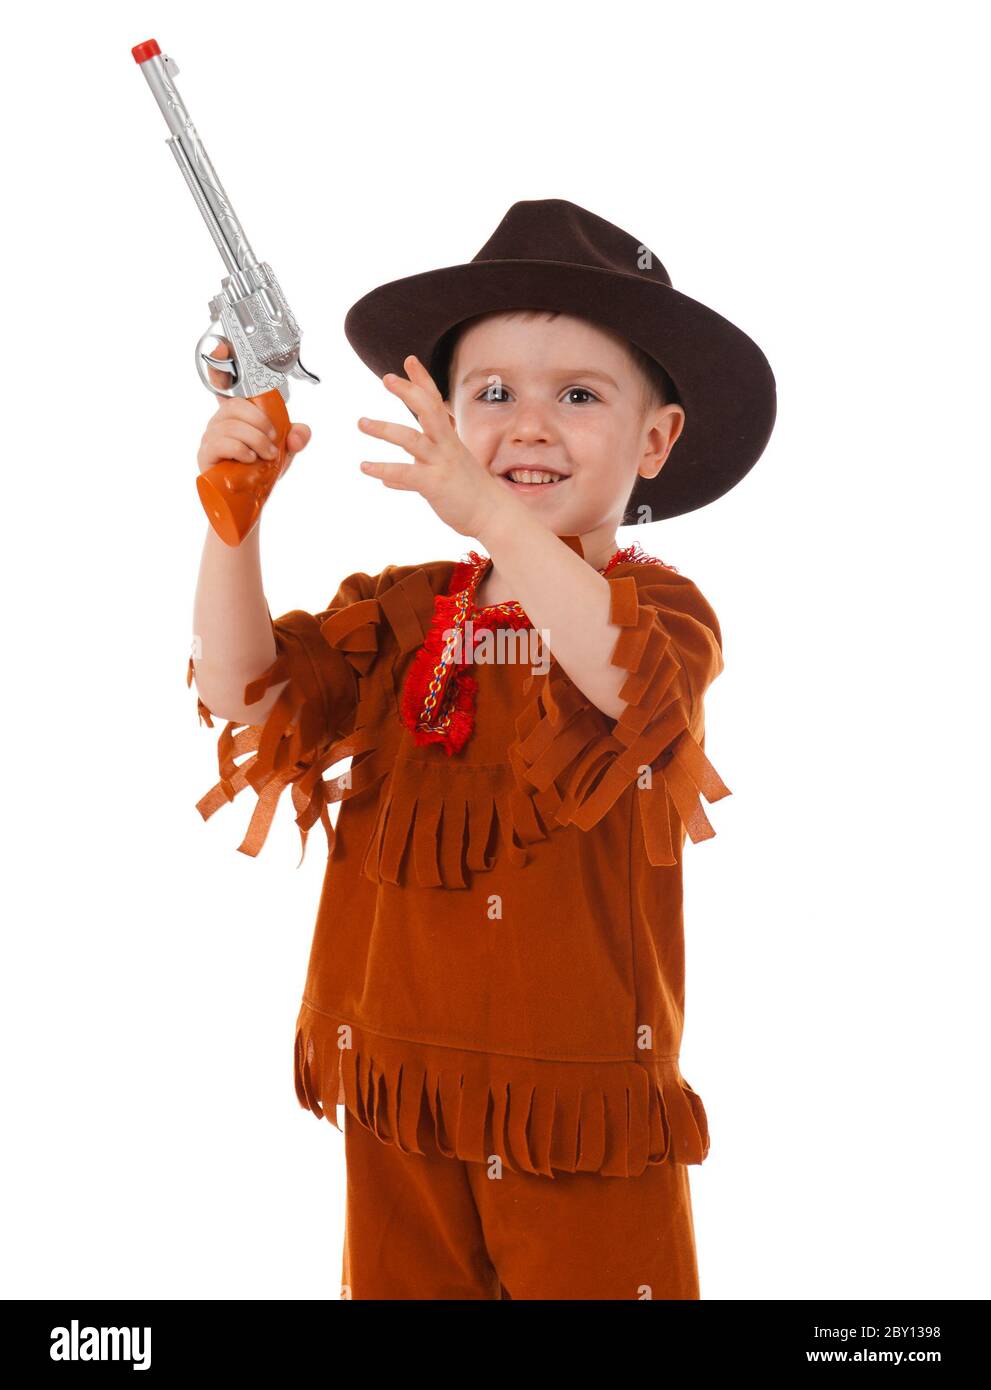 little boy wearing a cowboy hat Stock Photo